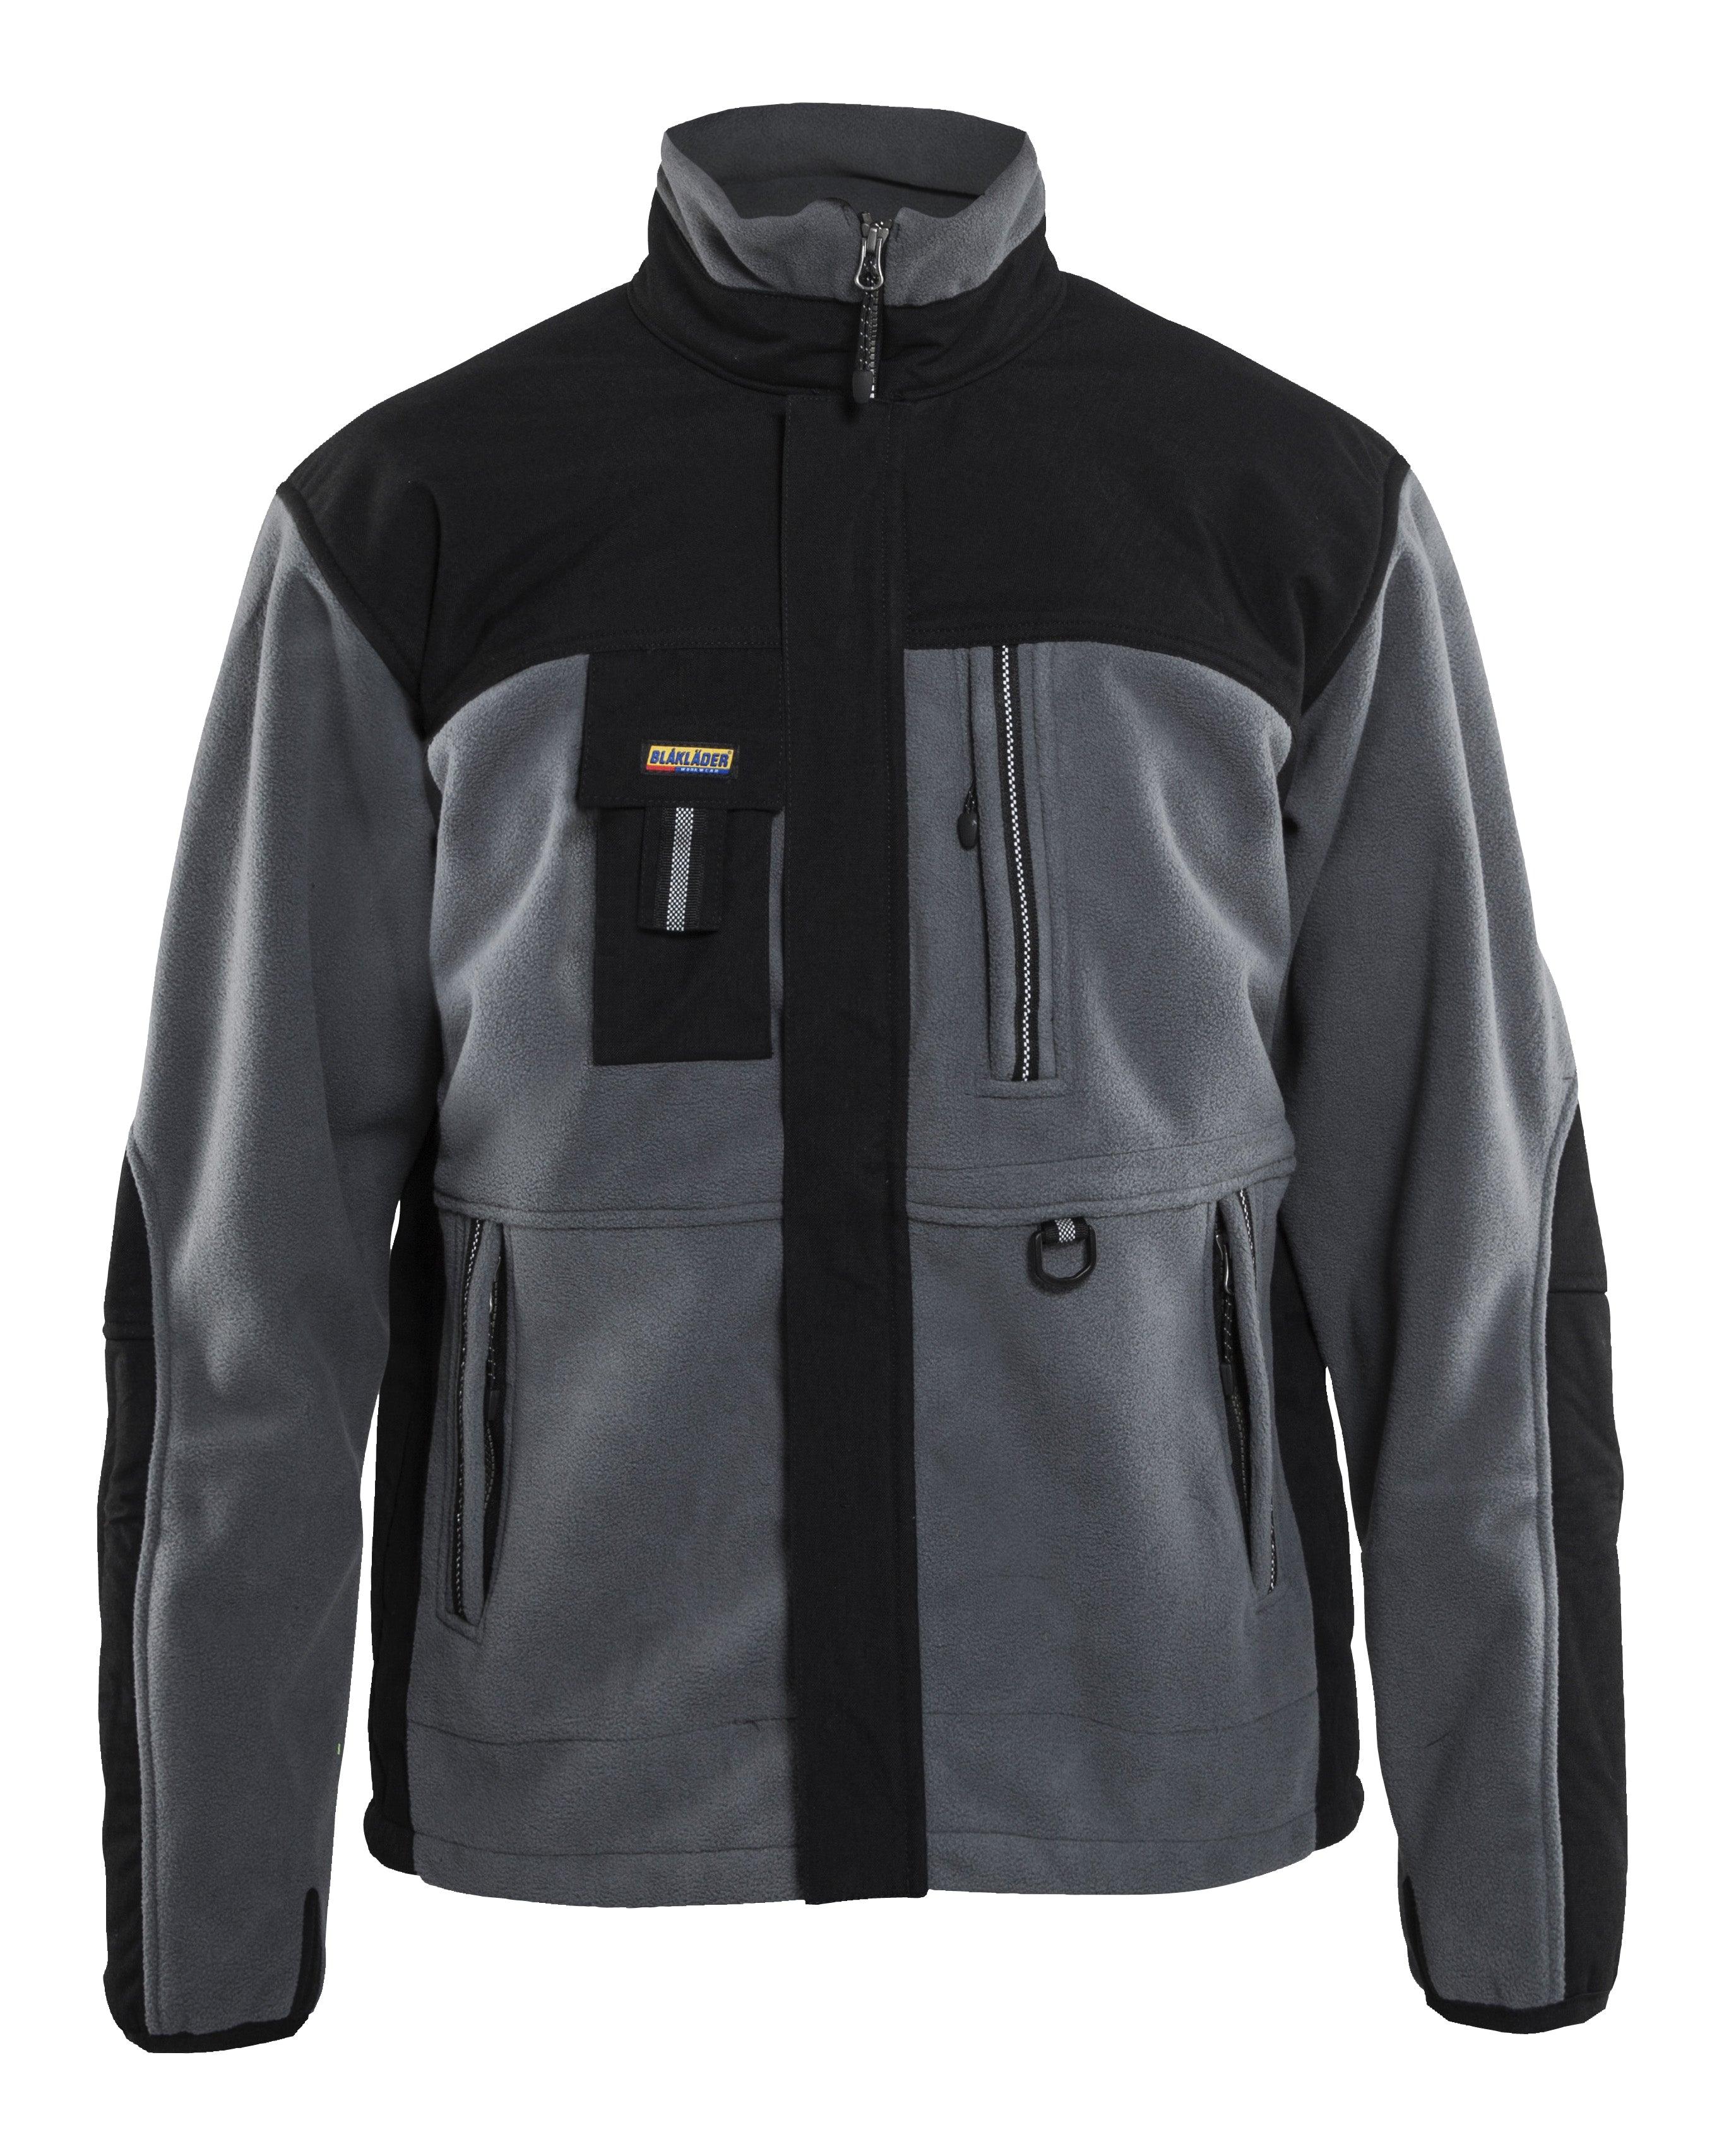 Blaklader 4855 Two Fisted Reinforced Fleece Jacket - Grey/Black - Trusted Gear Company LLC